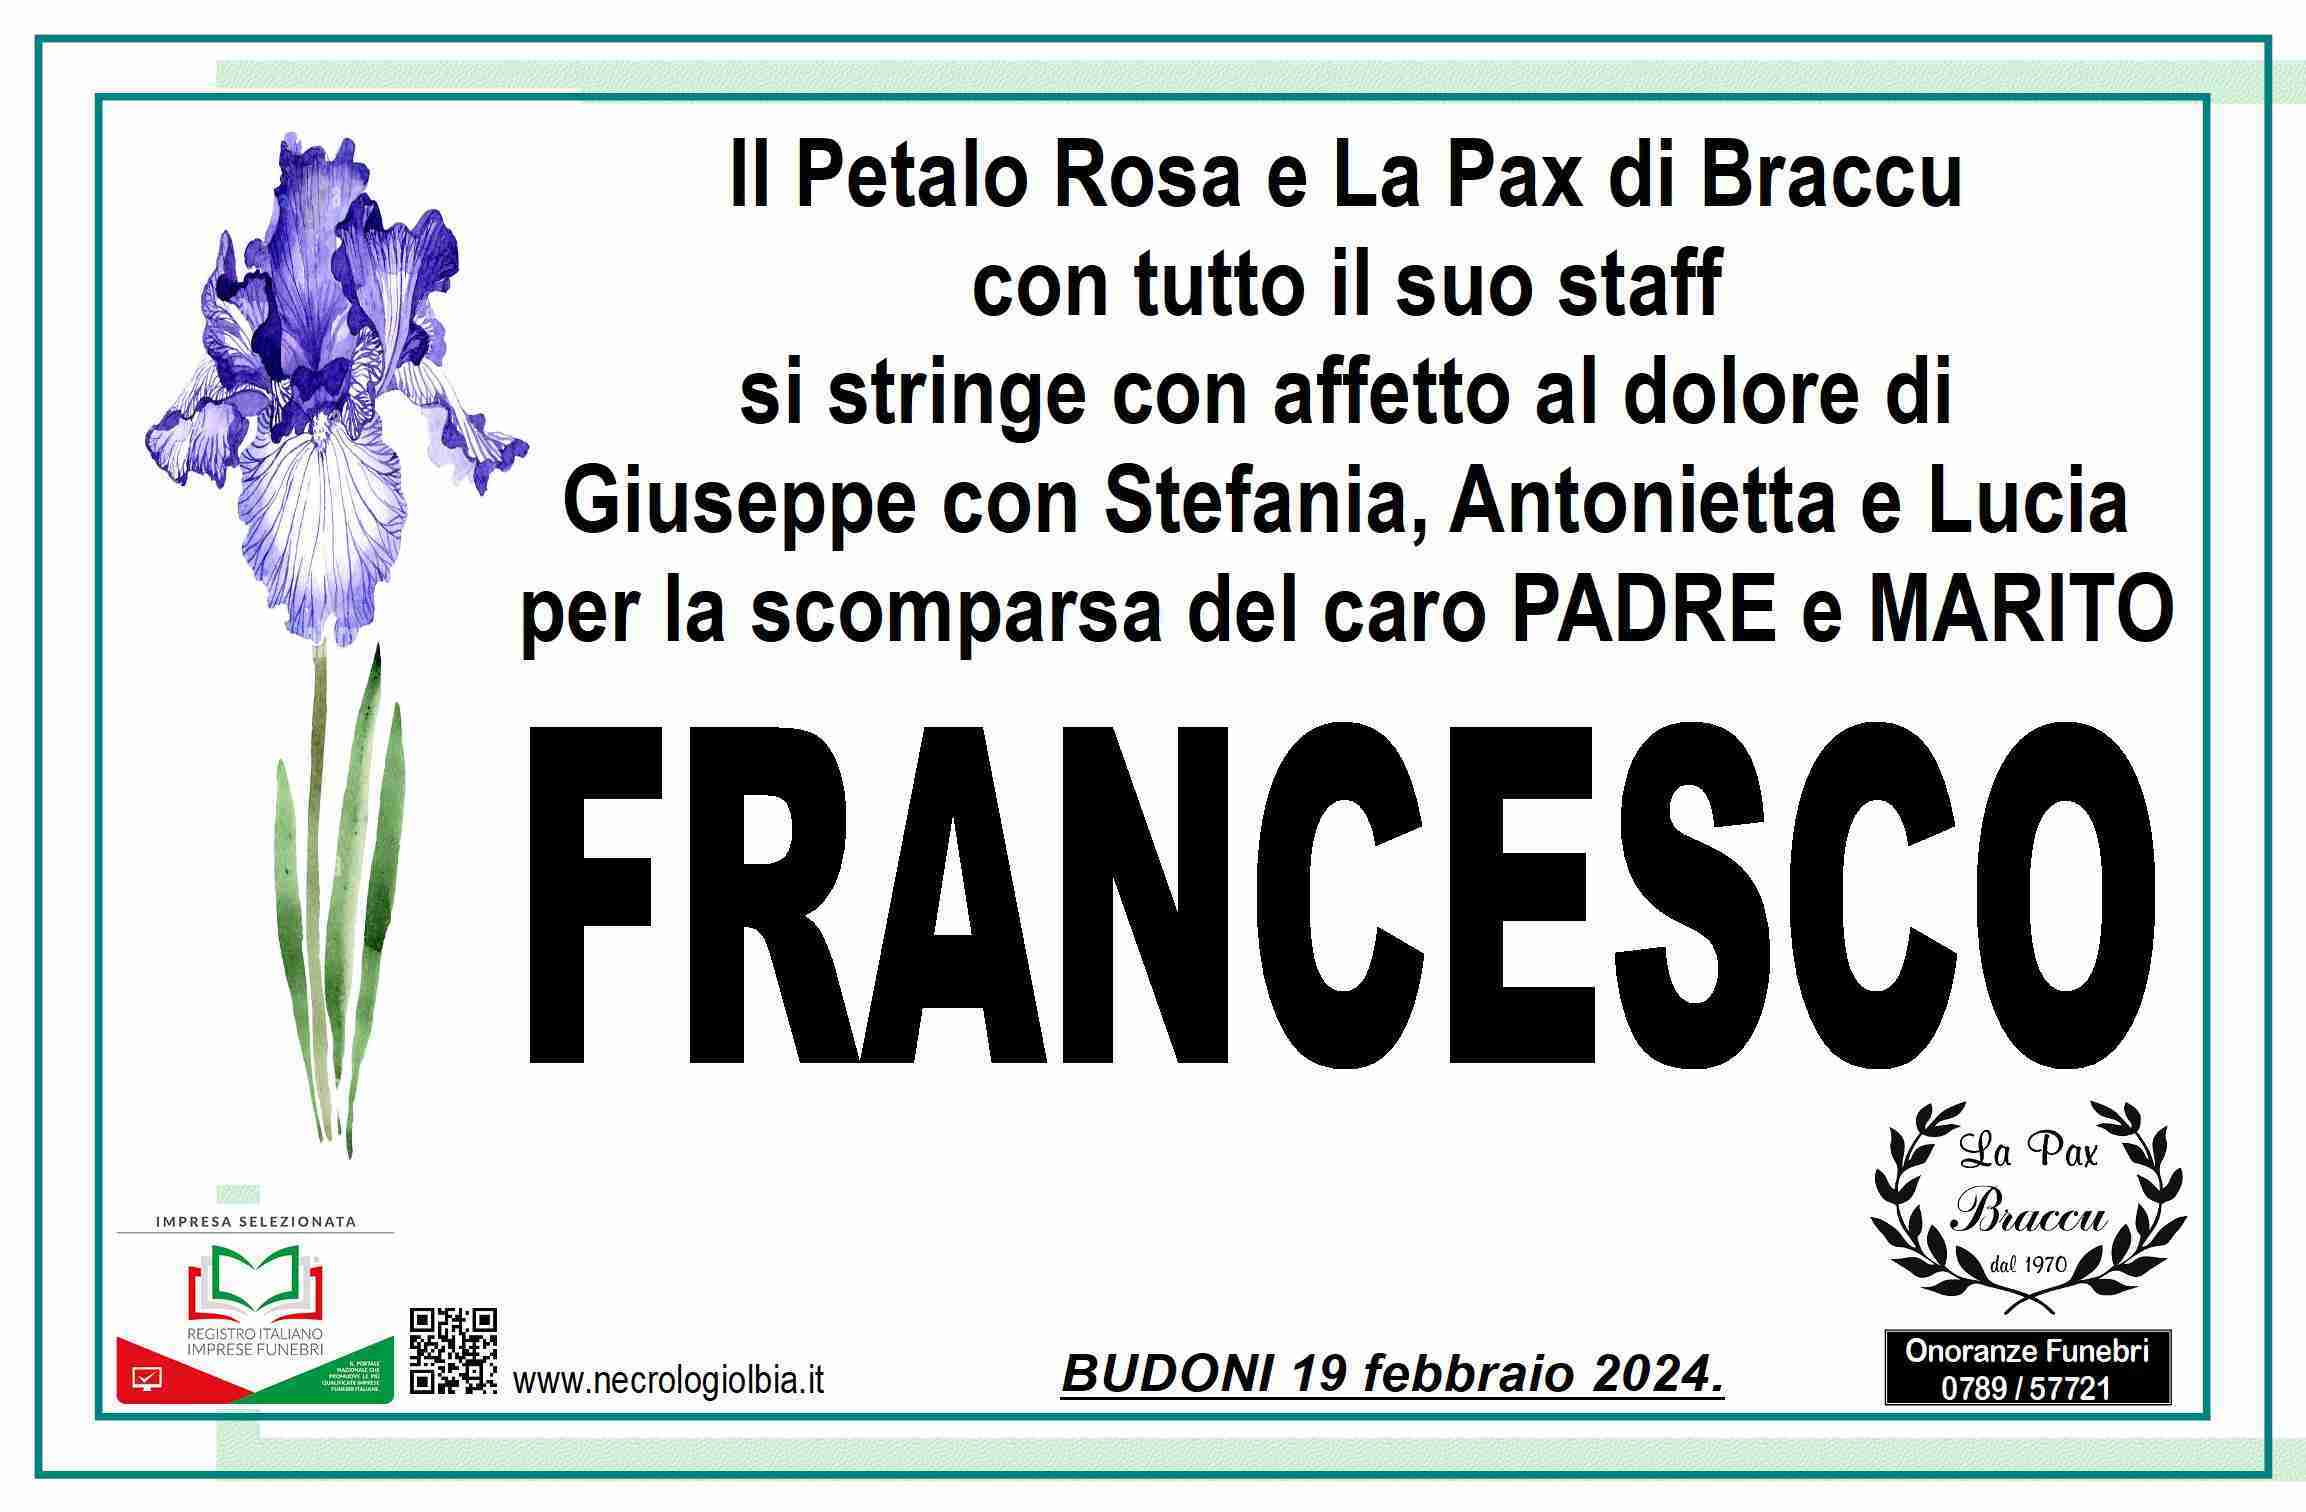 Francesco Brundu